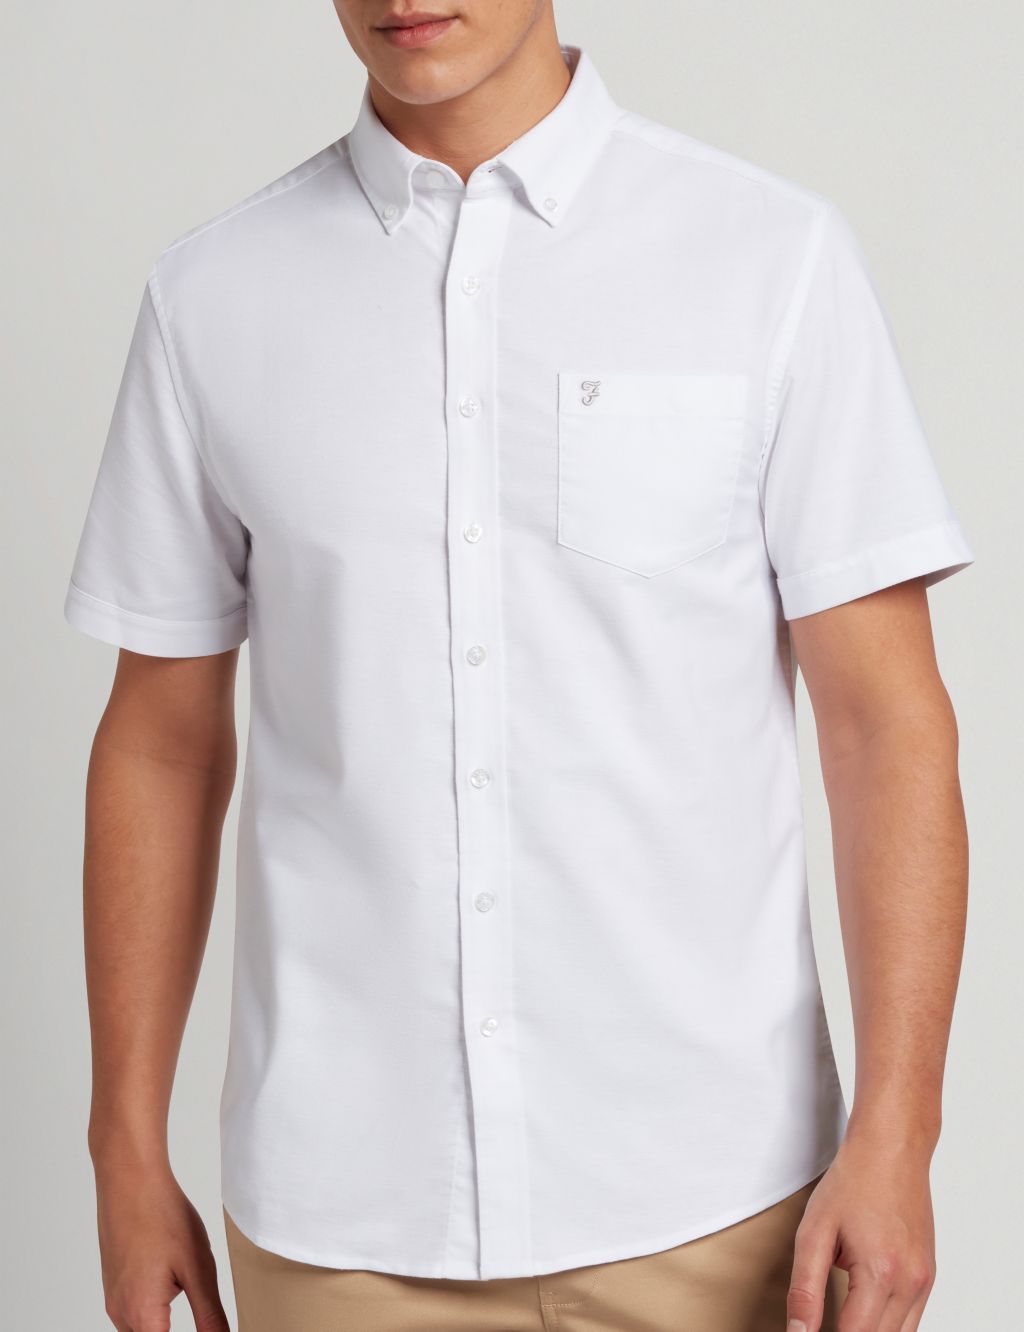 Cotton Blend Oxford Shirt image 1